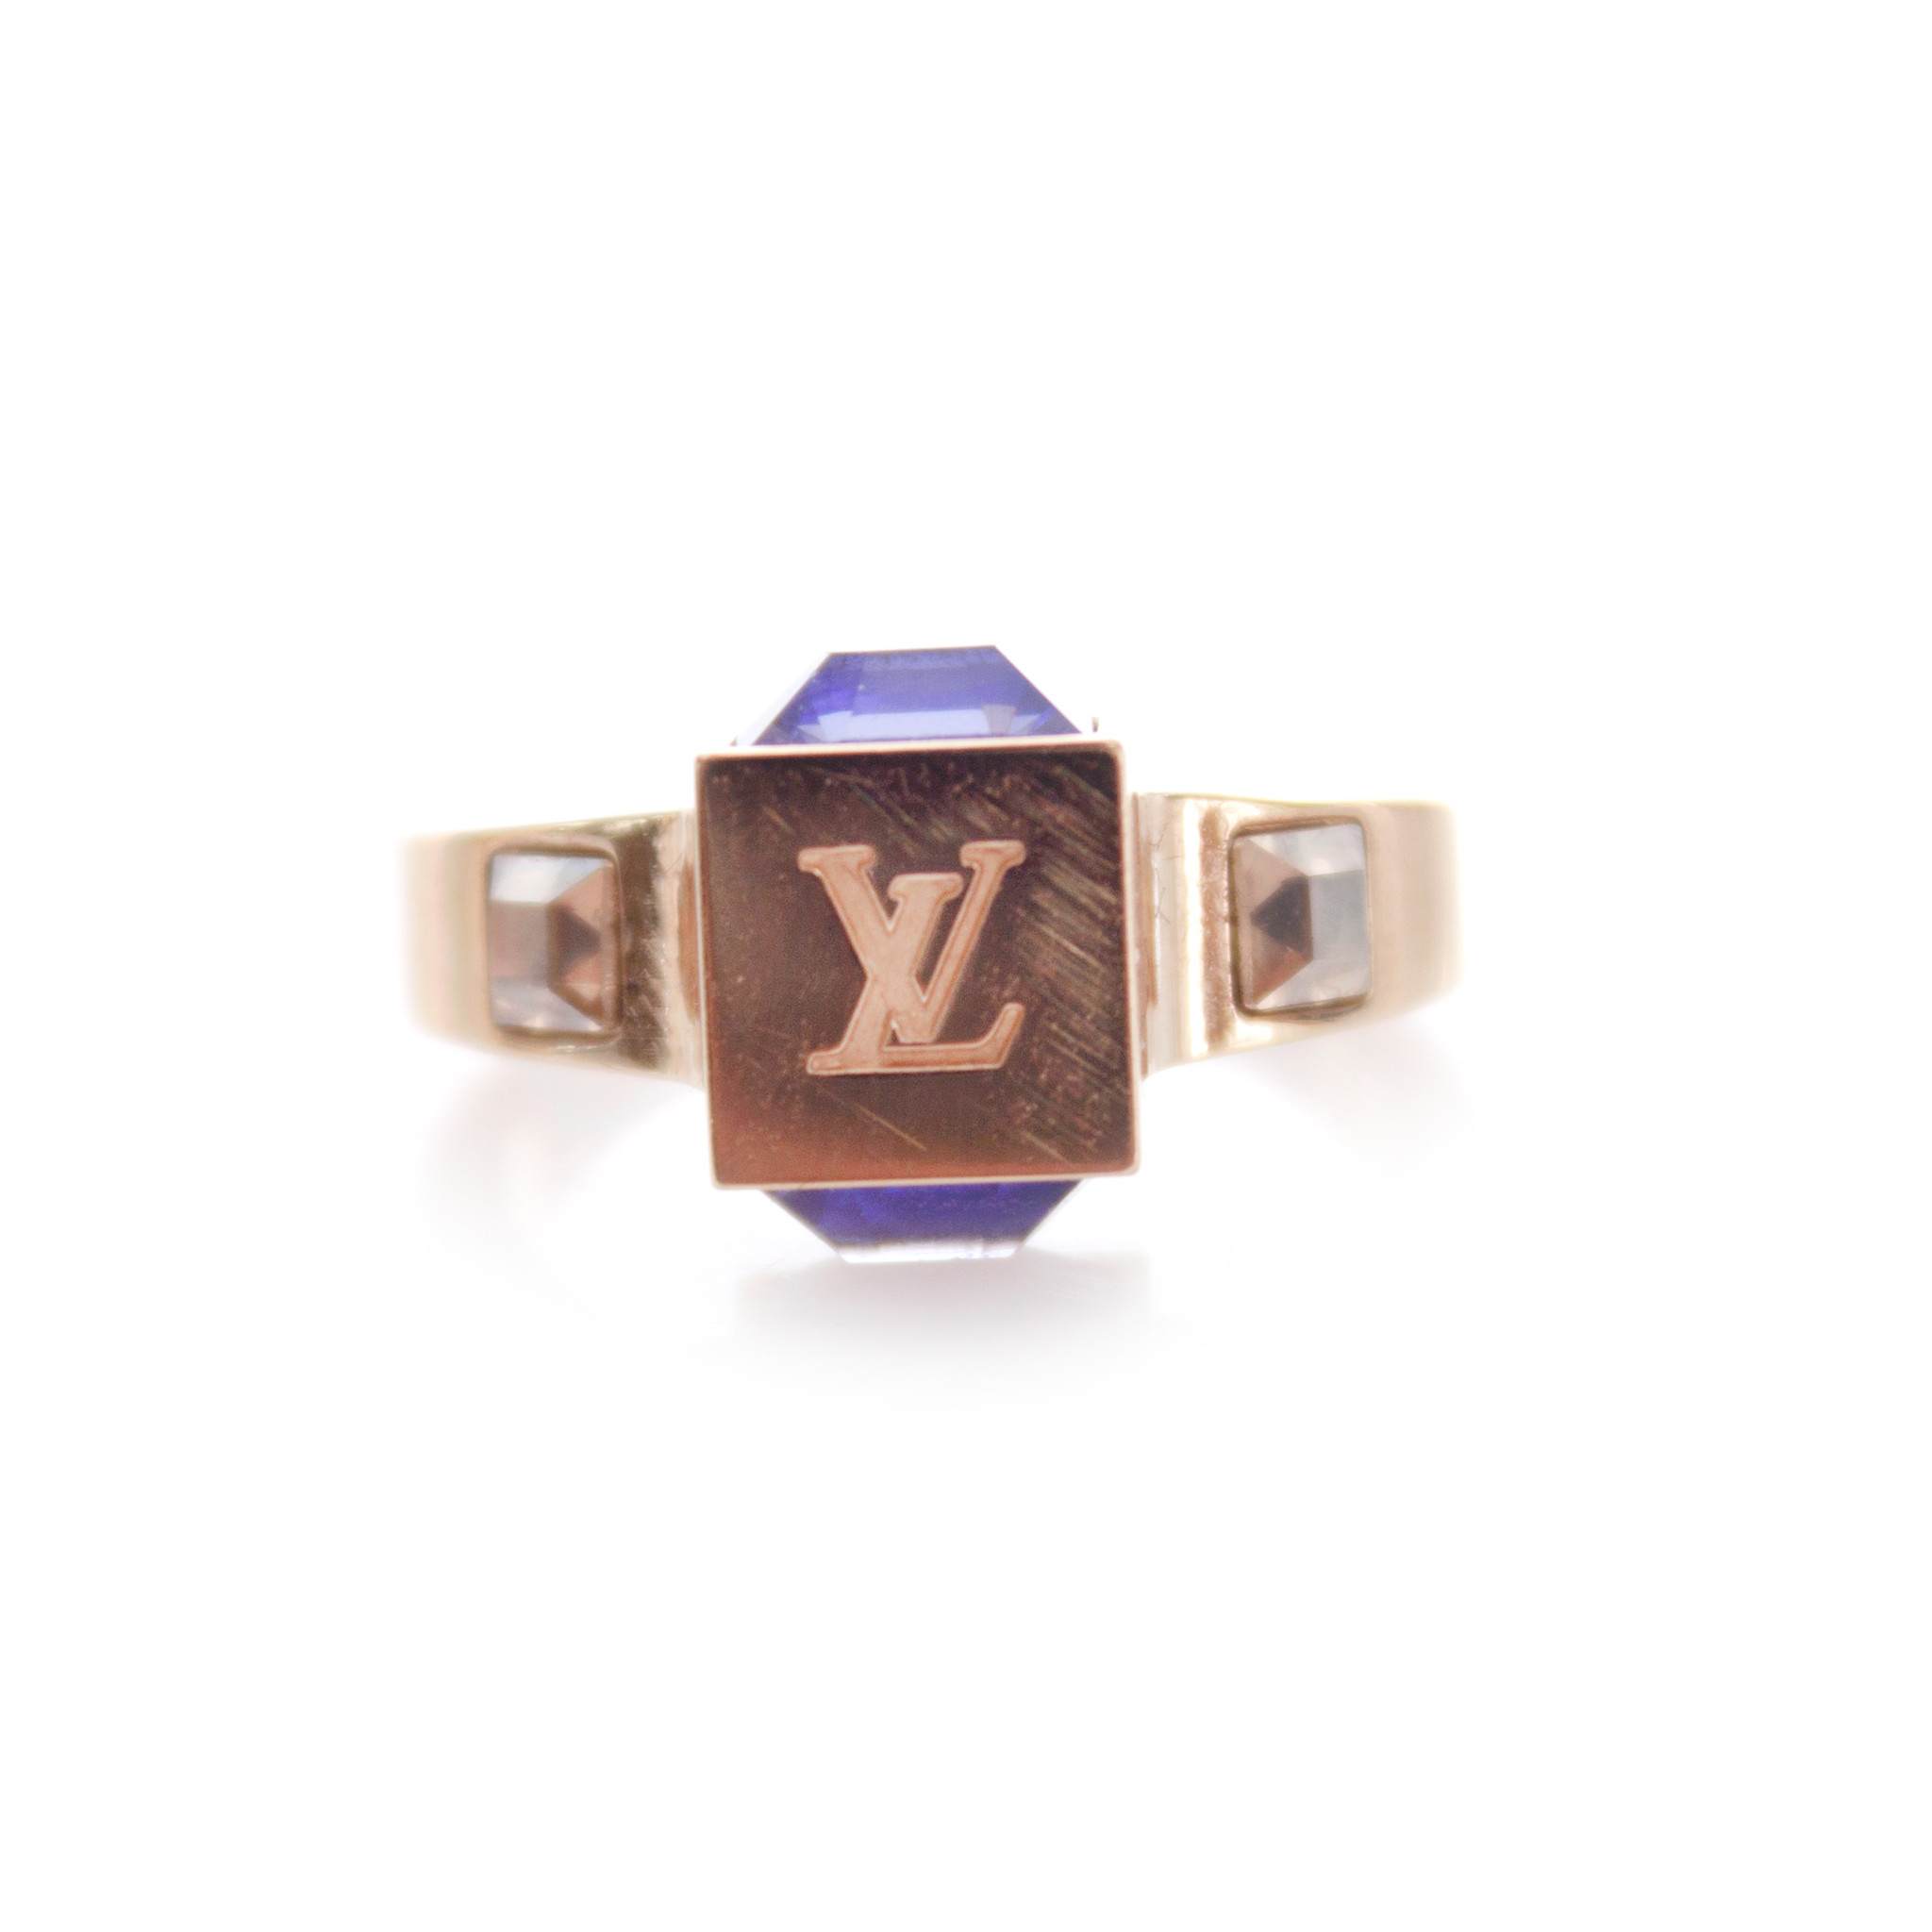 Authentic - New Louis Vuitton Gamble Ring - Size S